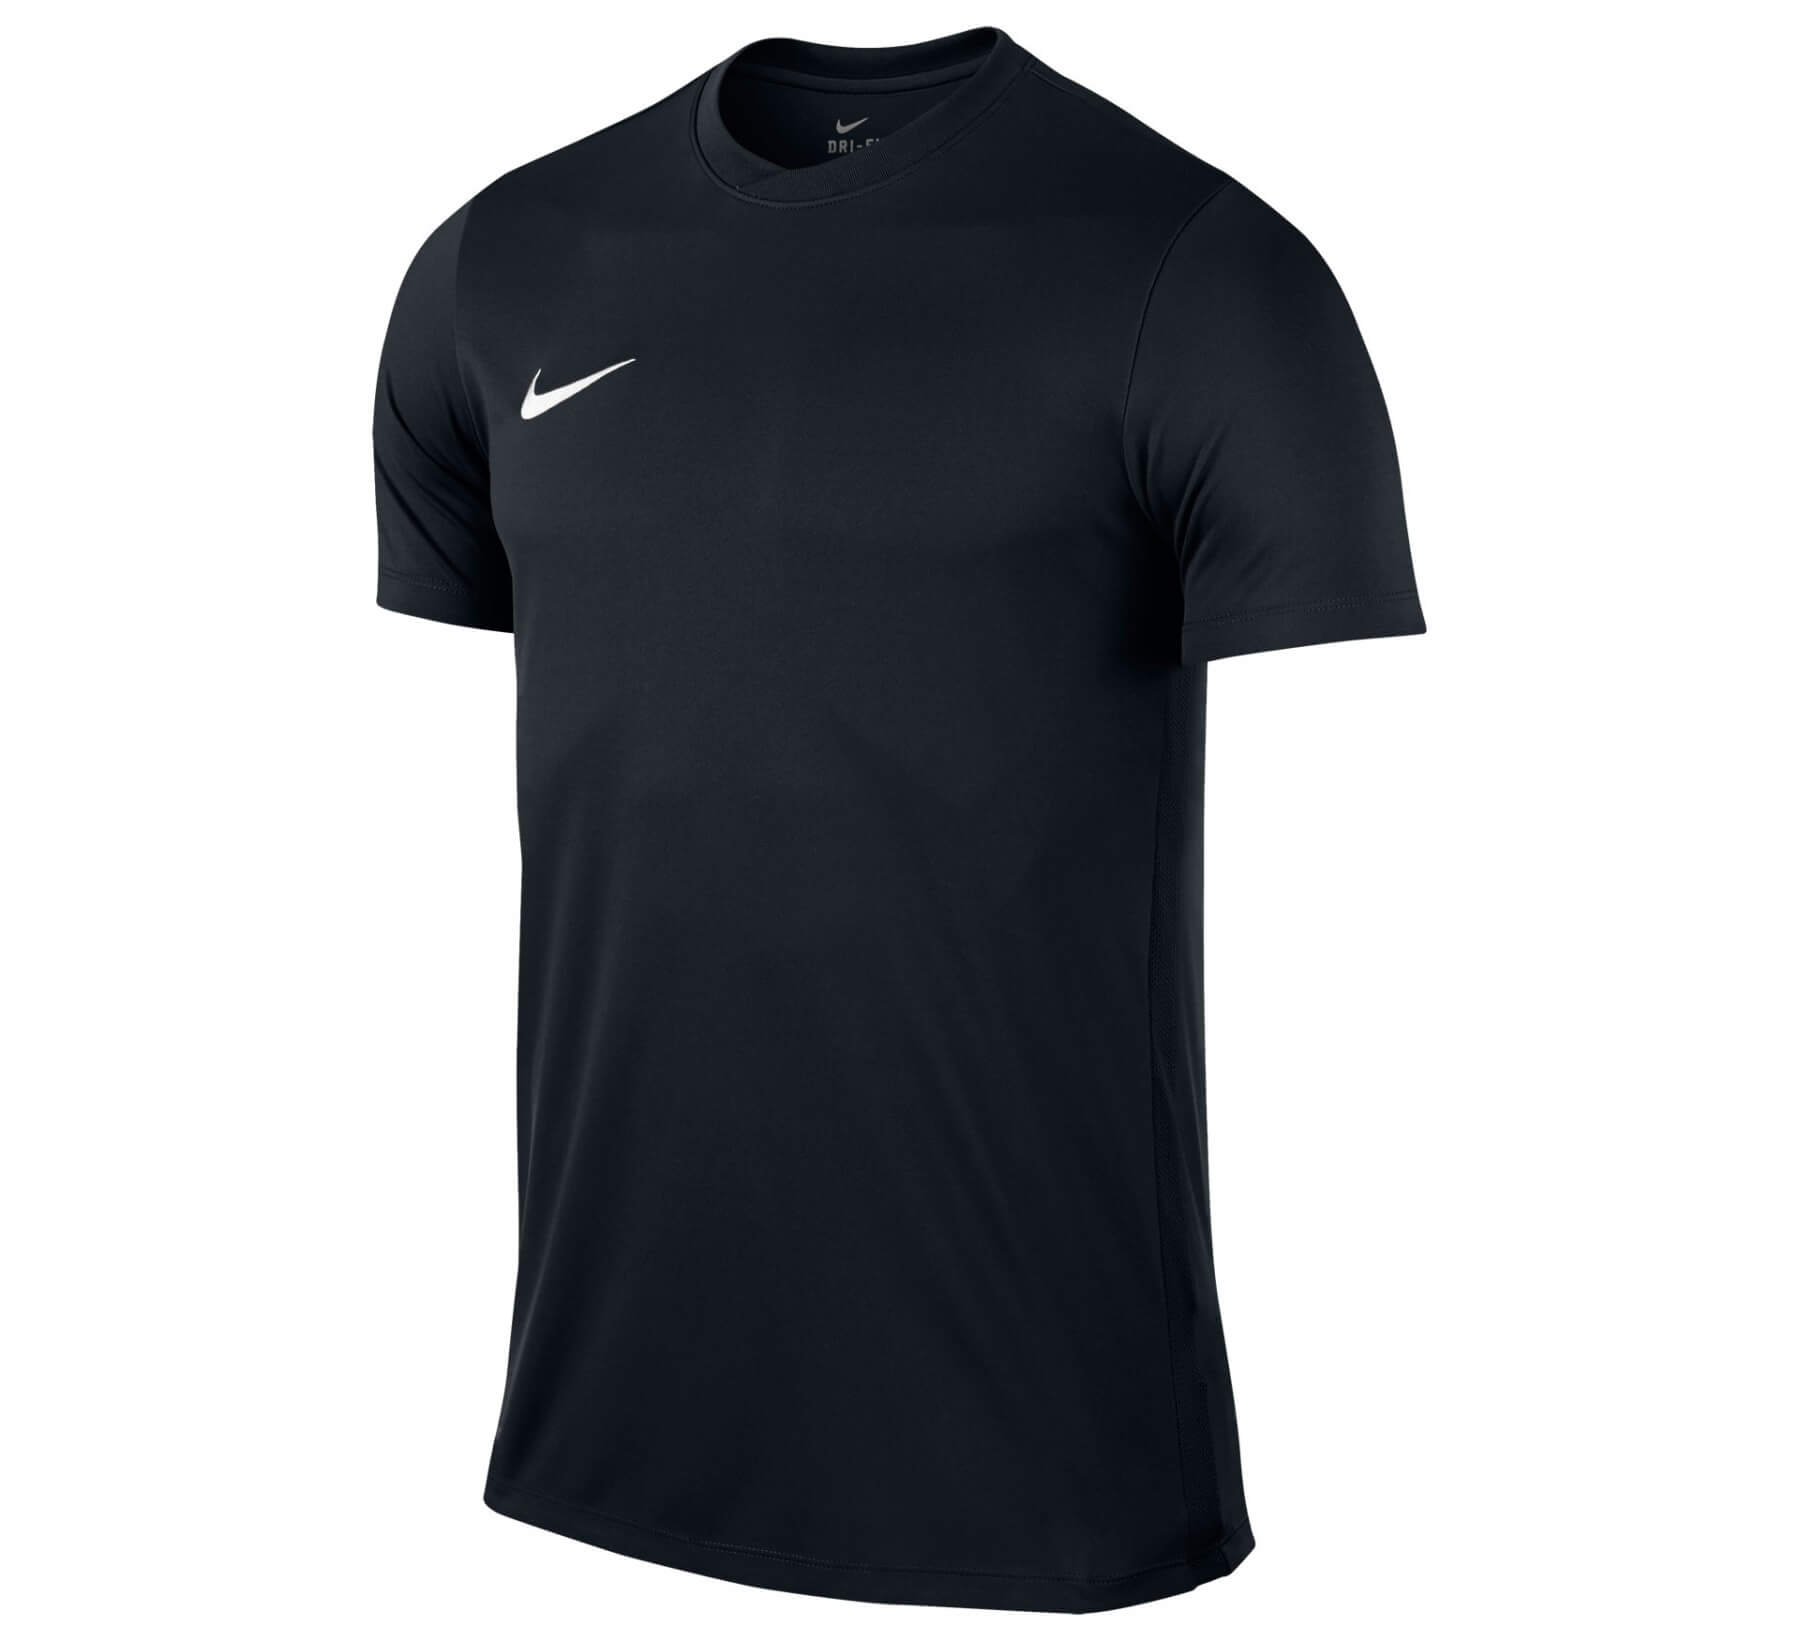 Gietvorm Daar Reis Nike sportshirts bedrukken - Snel, goedkoop en van top kwaliteit